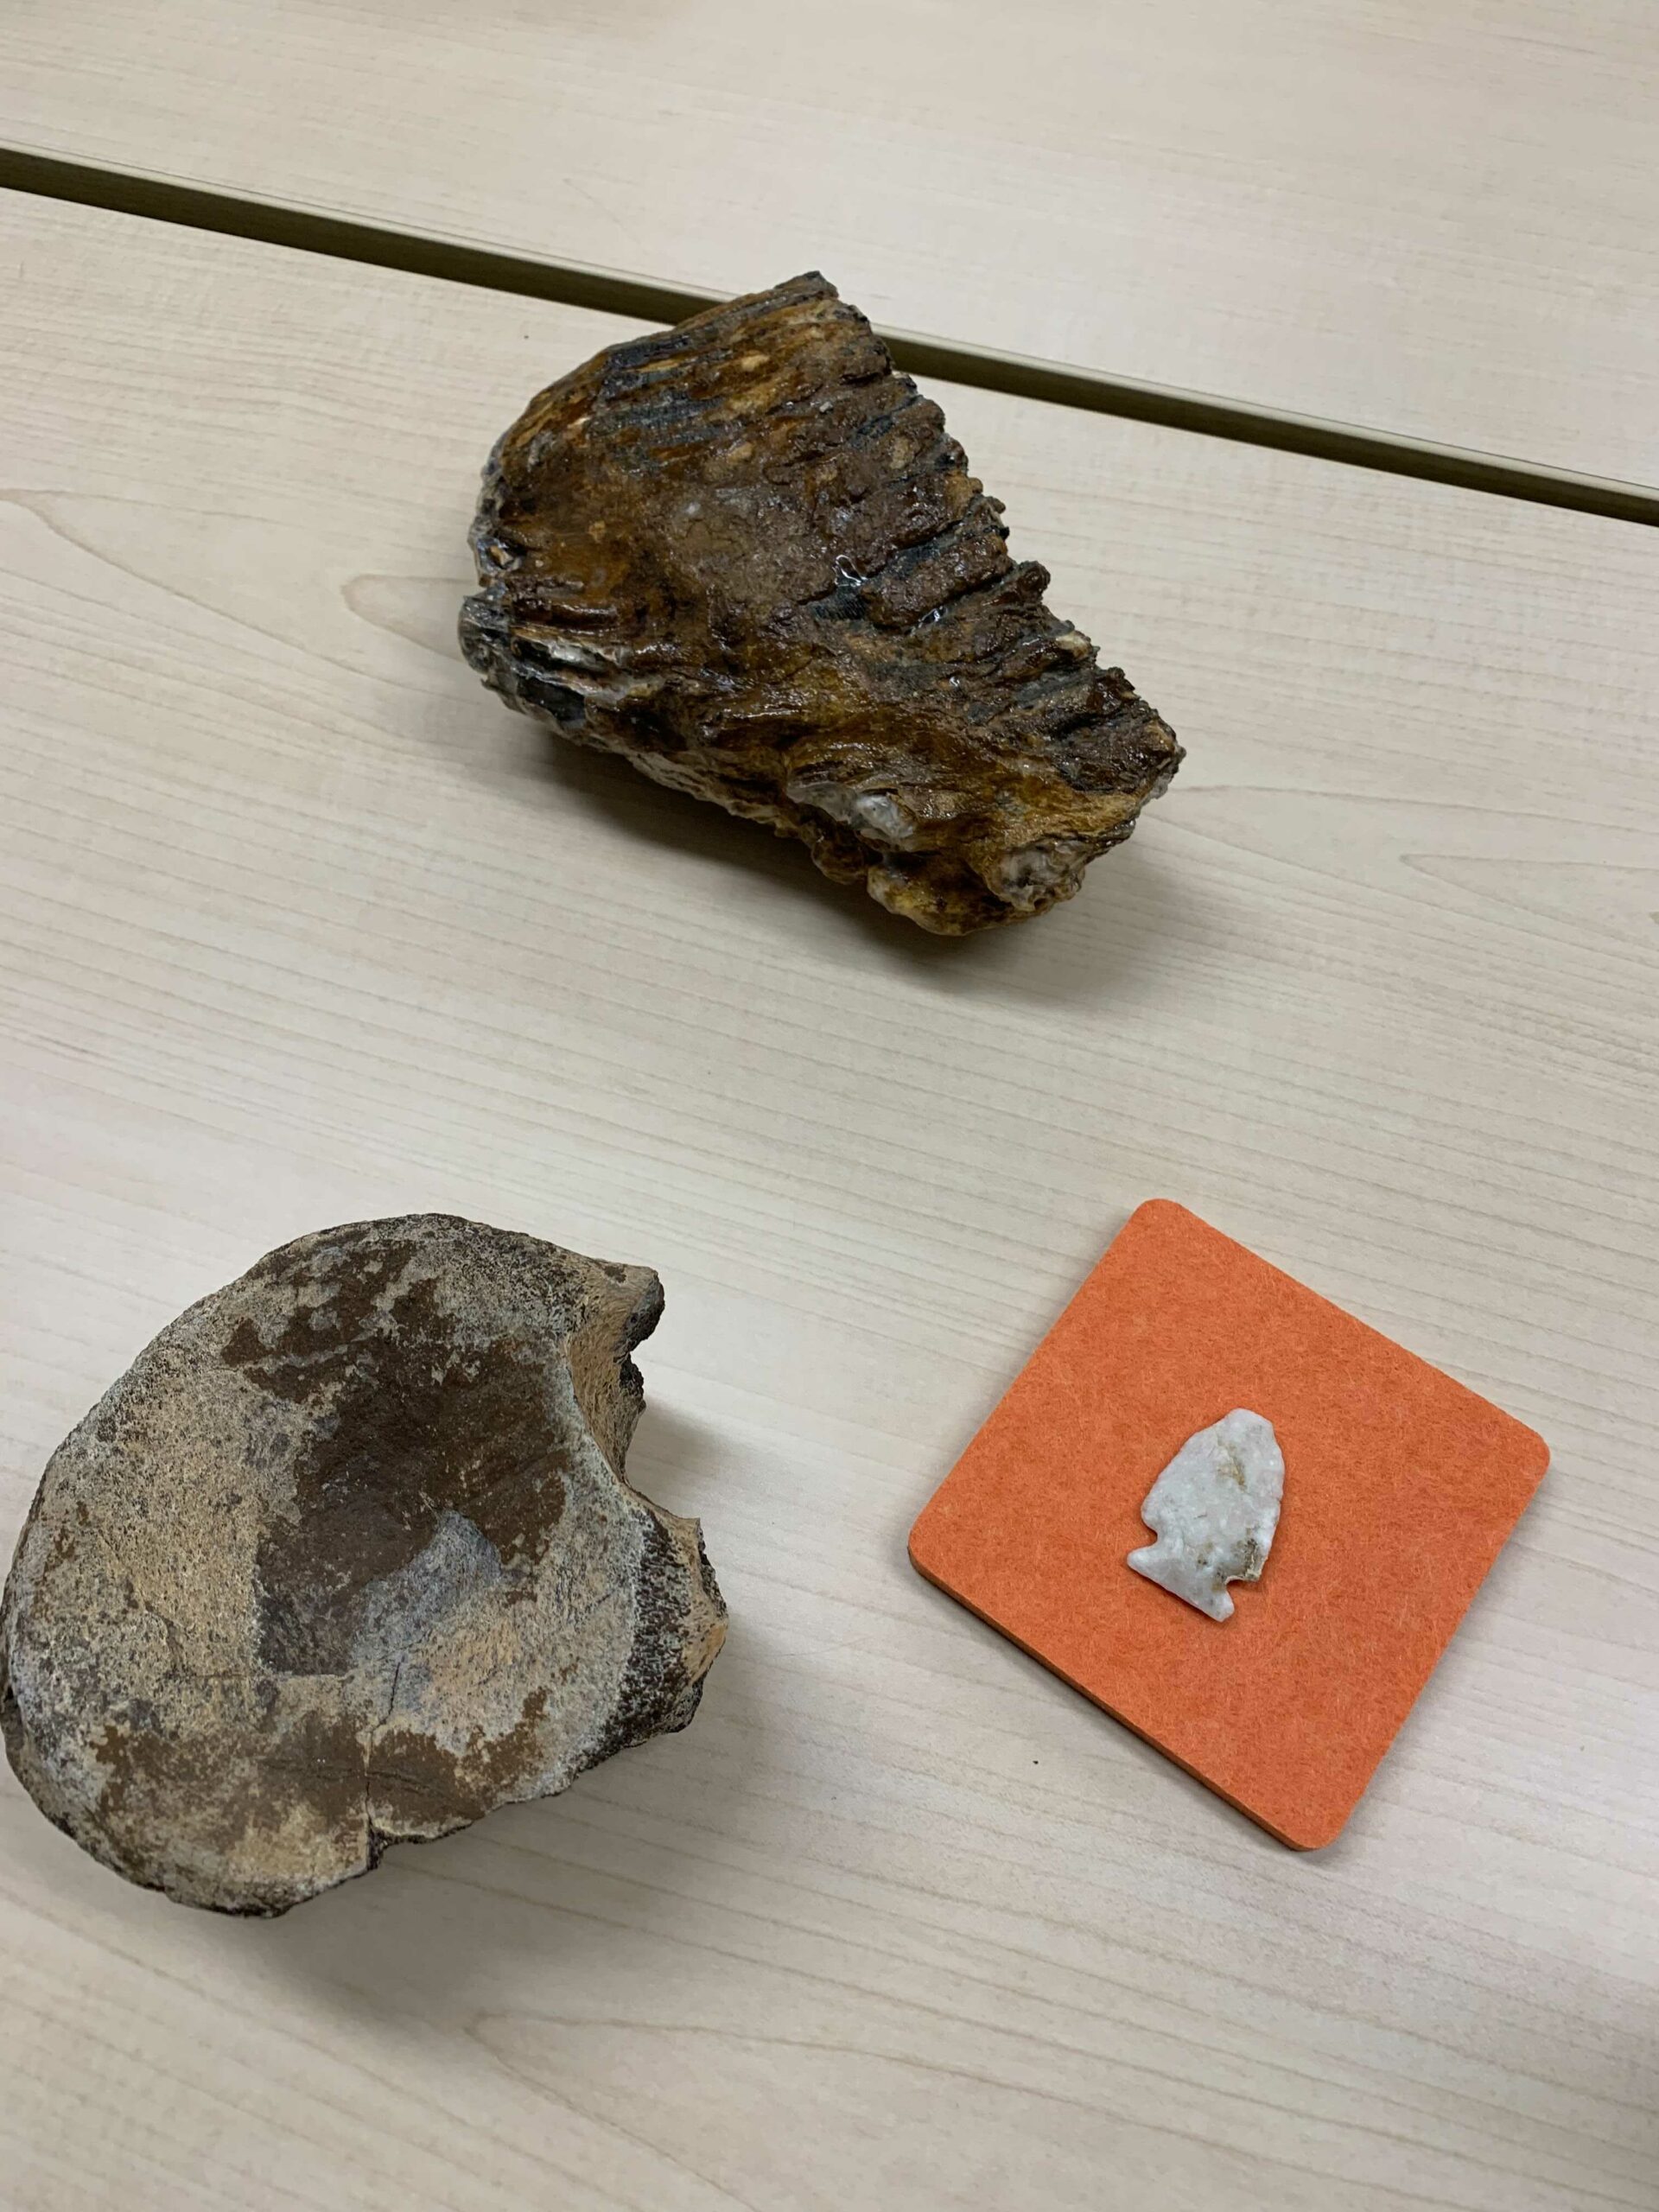 This is a photo of an atlatl stone point, baby mammoth molar, and dinosaur vertebrae.